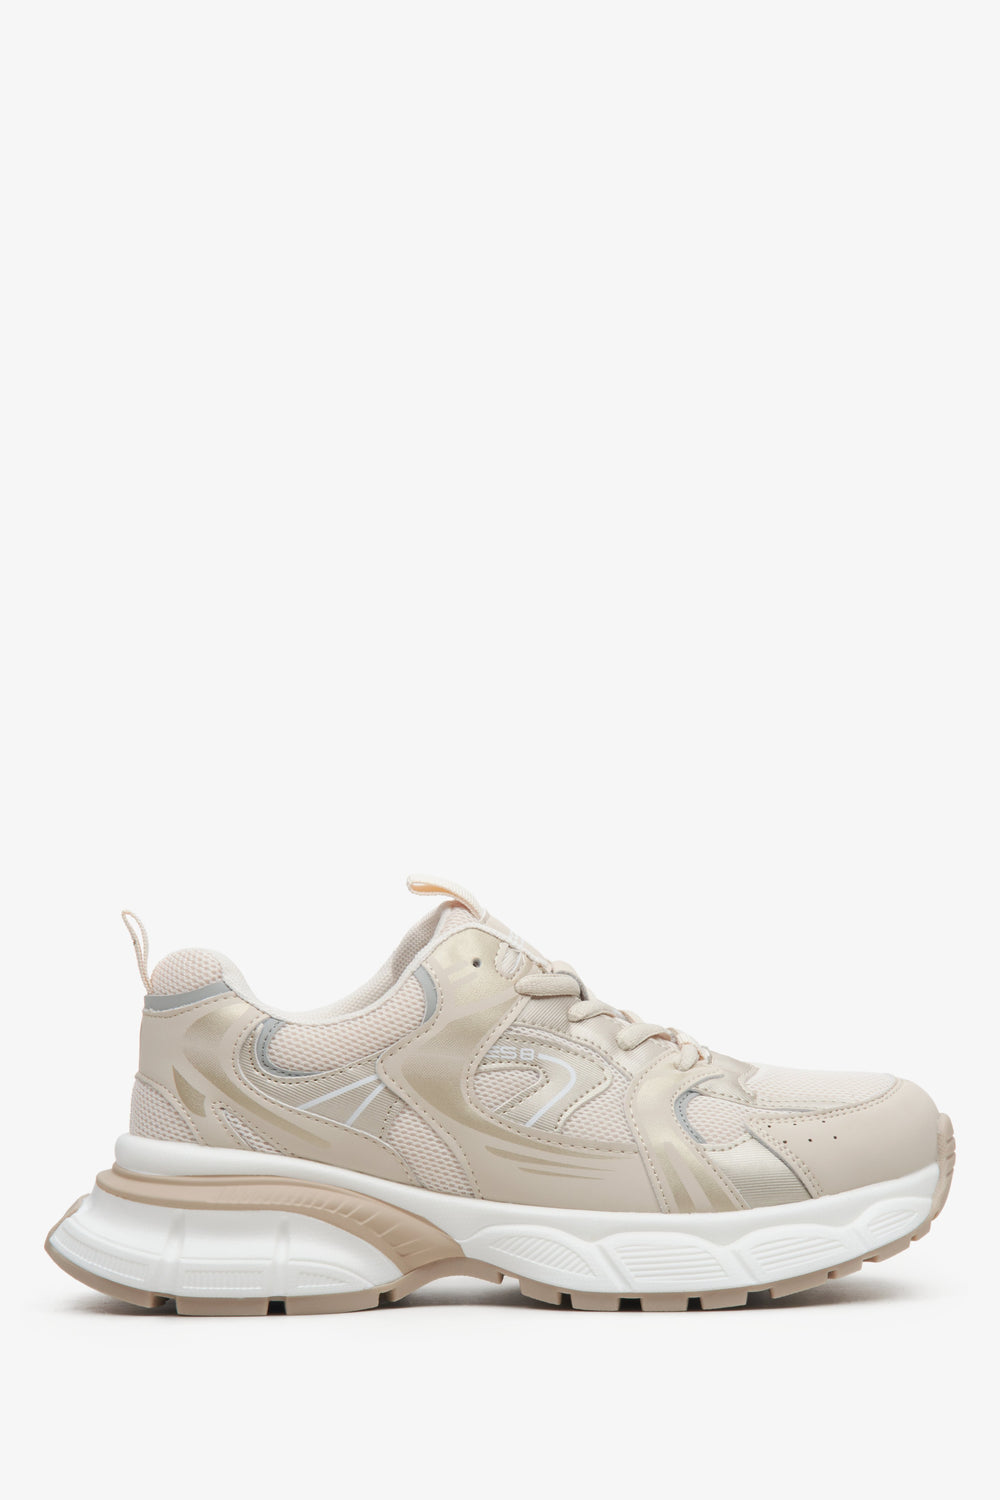 Women's Beige & White Sneakers with Golden Details ES 8 ER00114673.